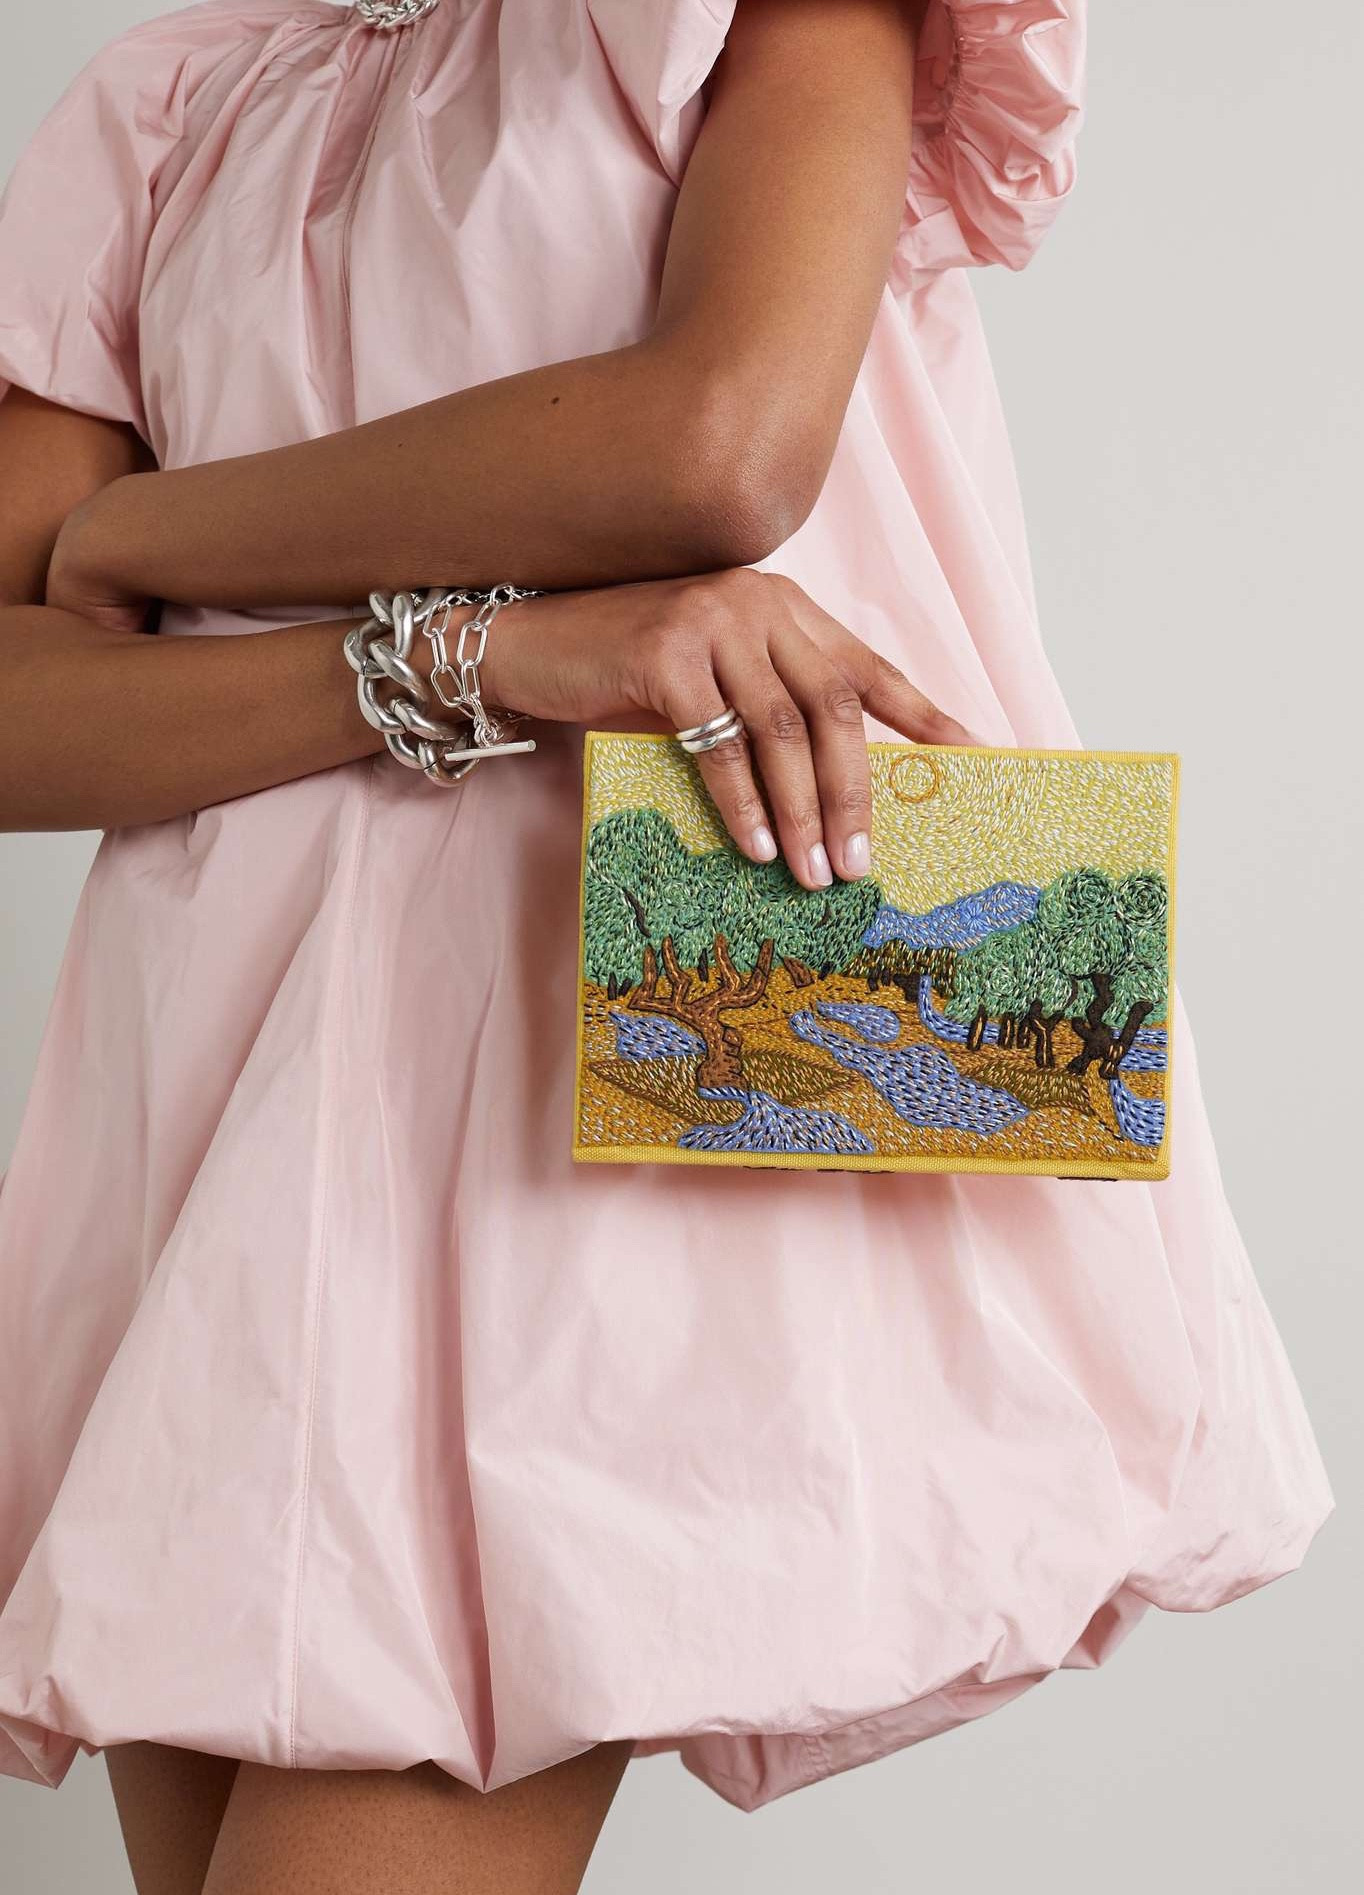 Olympia Le-Tan Van Gogh's Starry Night Book Clutch Bag, Indigo Latim, Women's, Clutches & Small Handbags Clutches Pouches & Wristlets